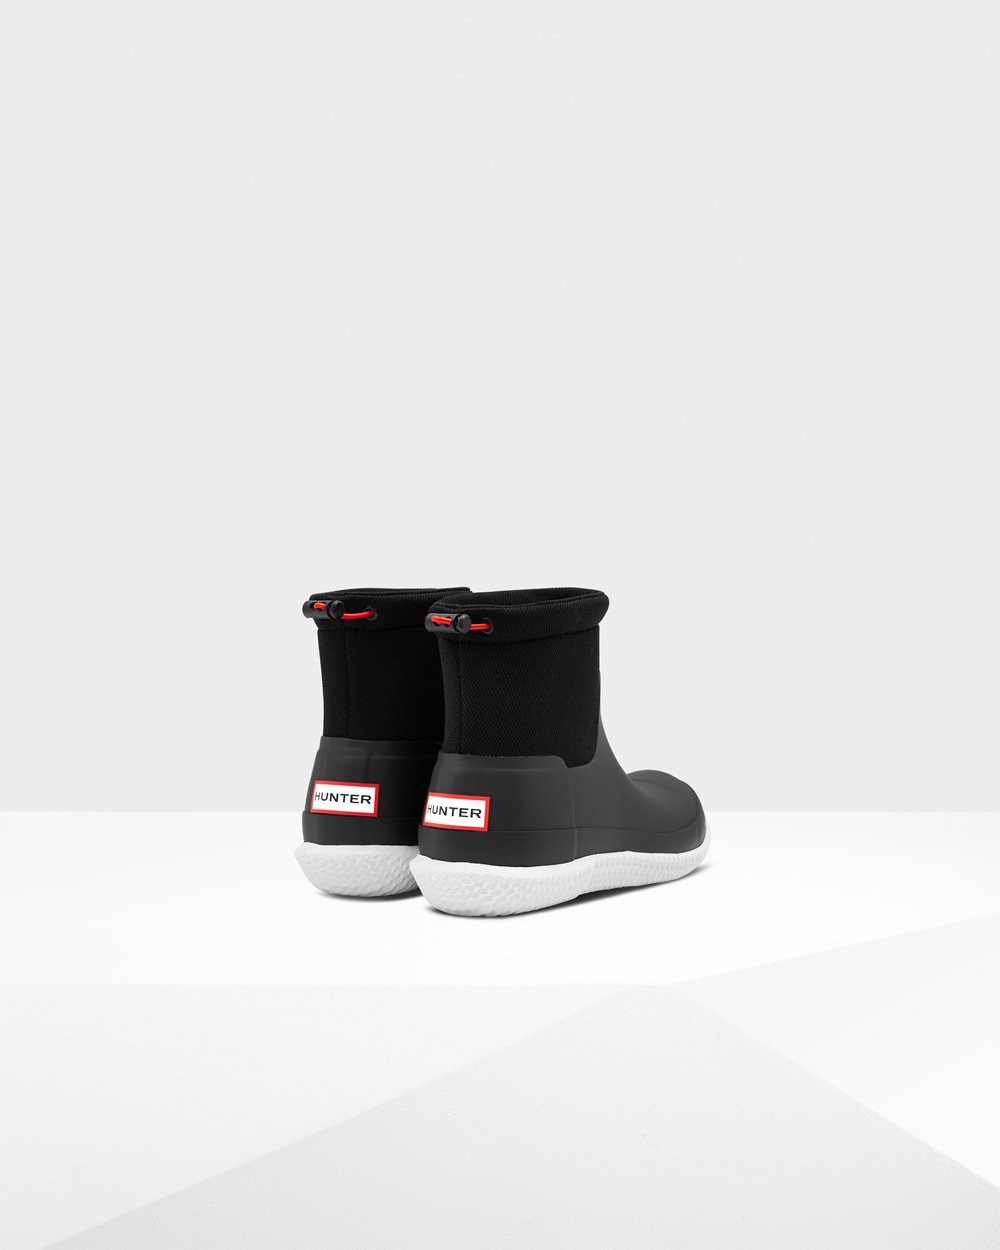 Sneakers Damske - Hunter Original Short Mesh Boots - Čierne - QAGWKXV-24